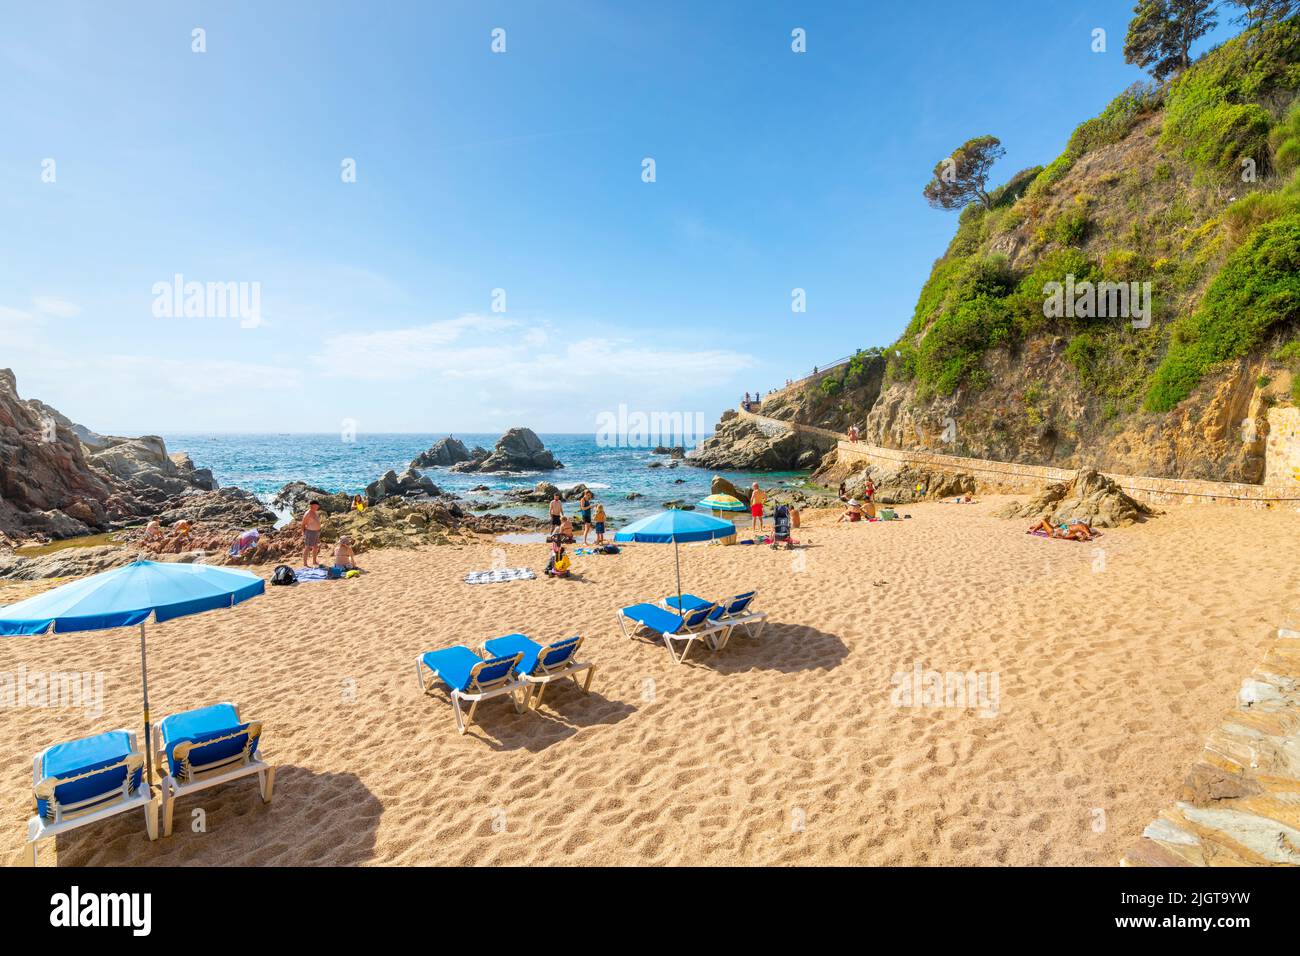 The sandy beach along the Costa Brava coast of the Mediterranean Sea at the resort town of Lloret de Mar, Spain. Stock Photo